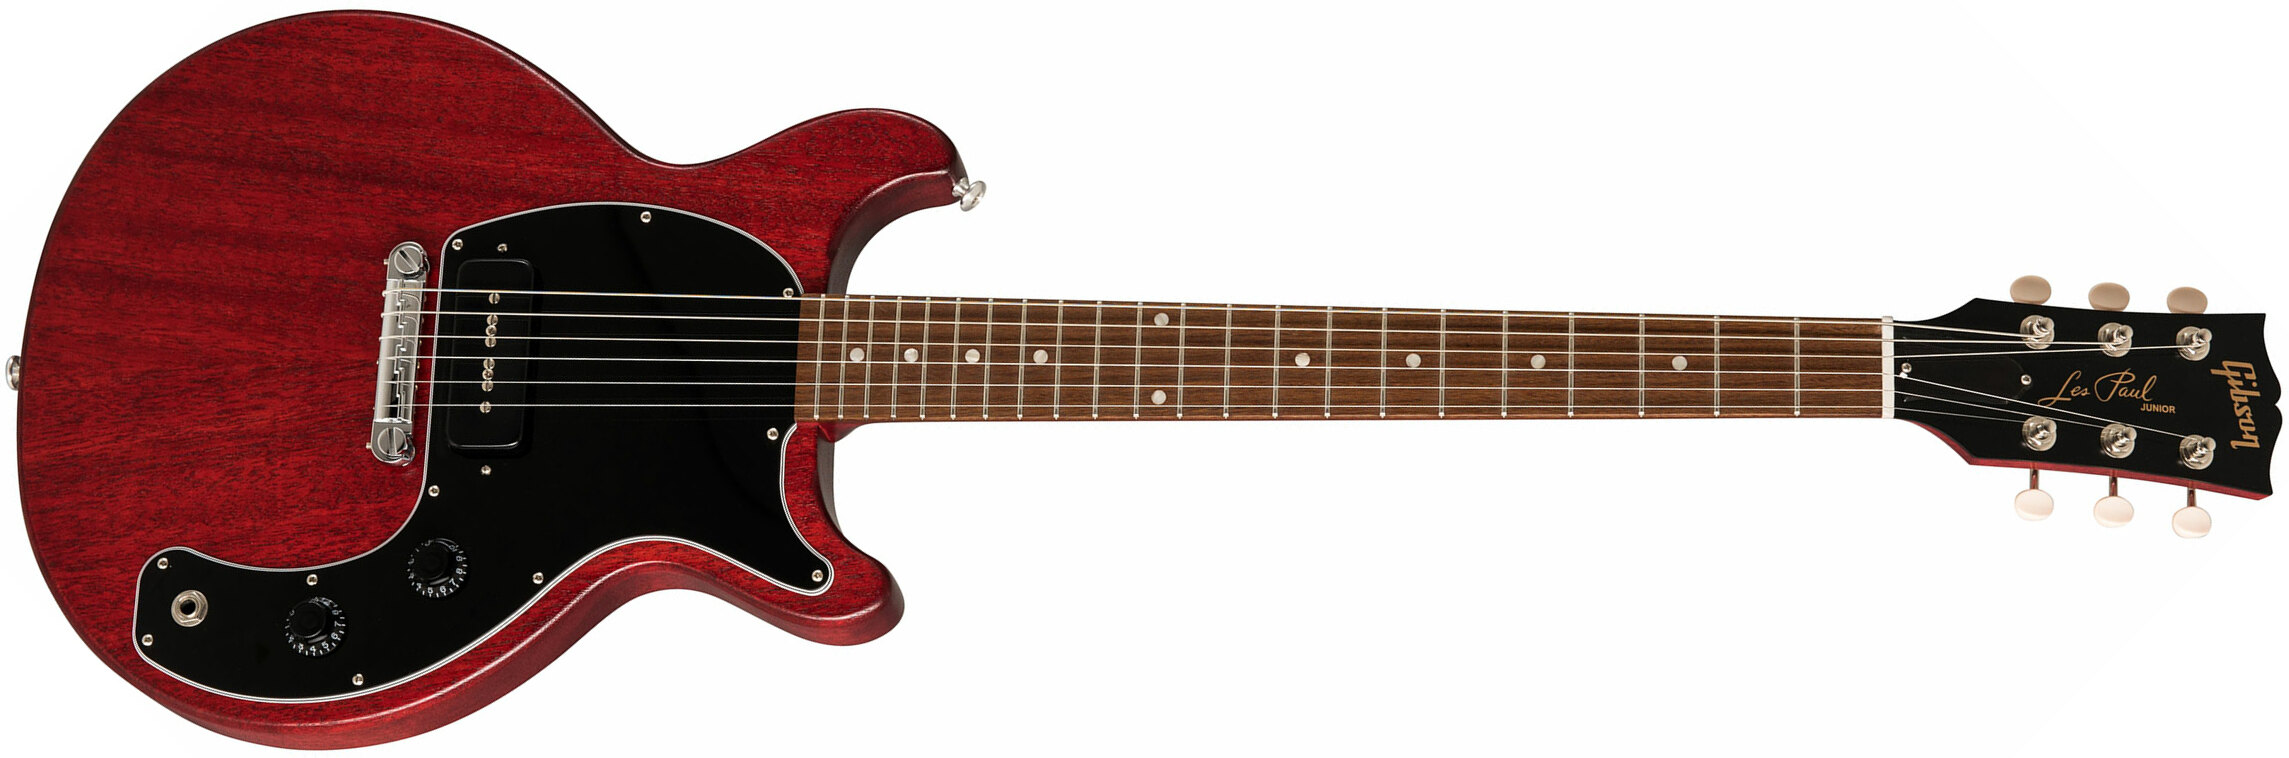 Gibson Les Paul Junior Tribute 2019 P90 Ht Rw - Worn Cherry - Single cut electric guitar - Main picture